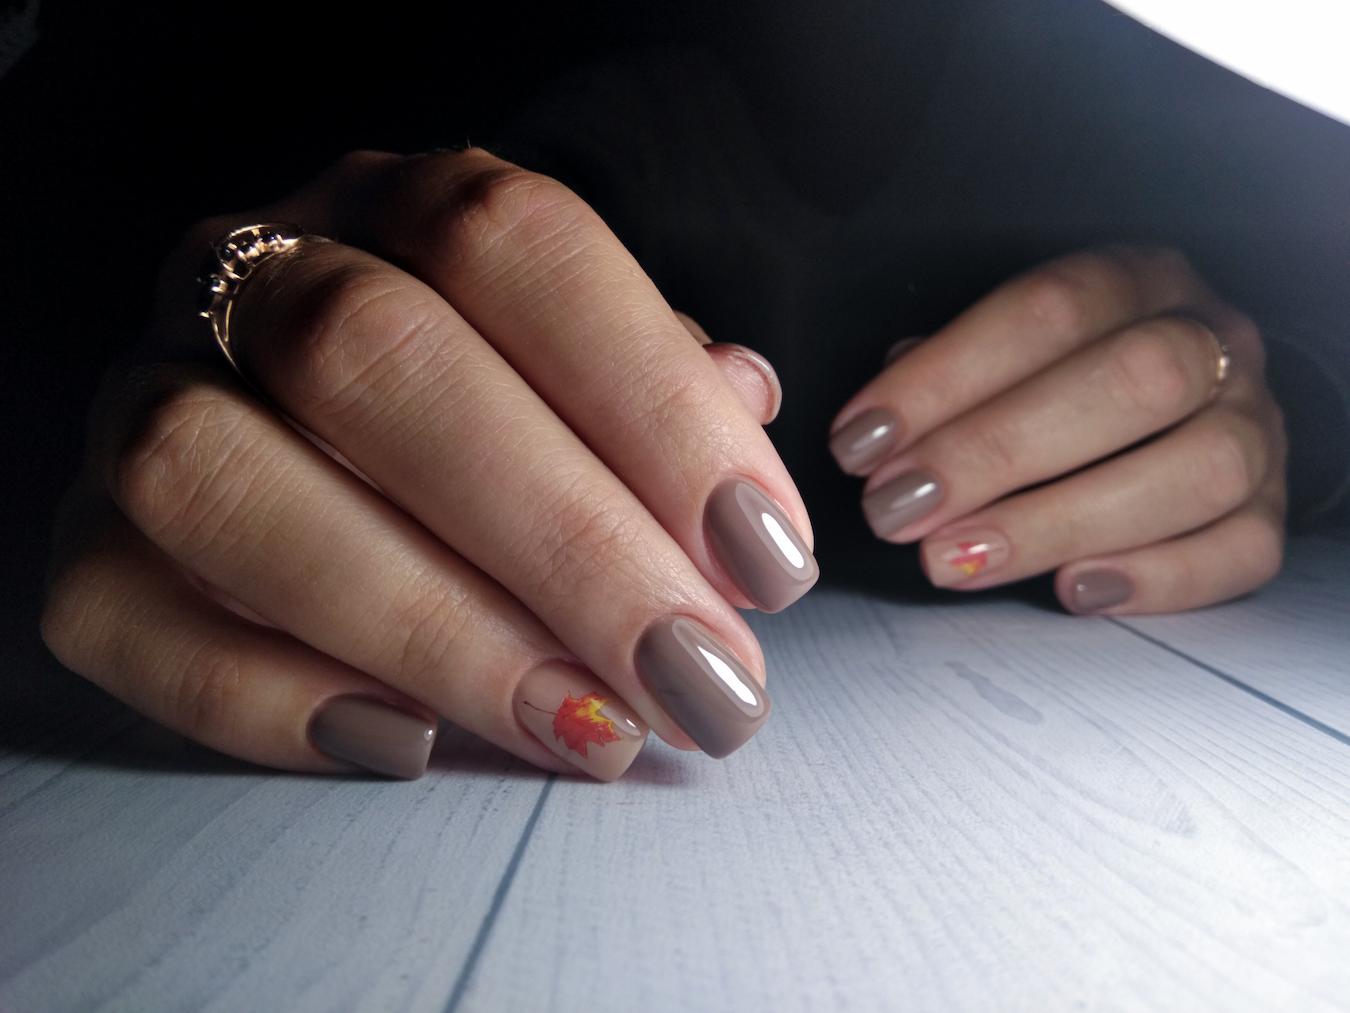 Nails Inc Autumn Shades | British Beauty Blogger